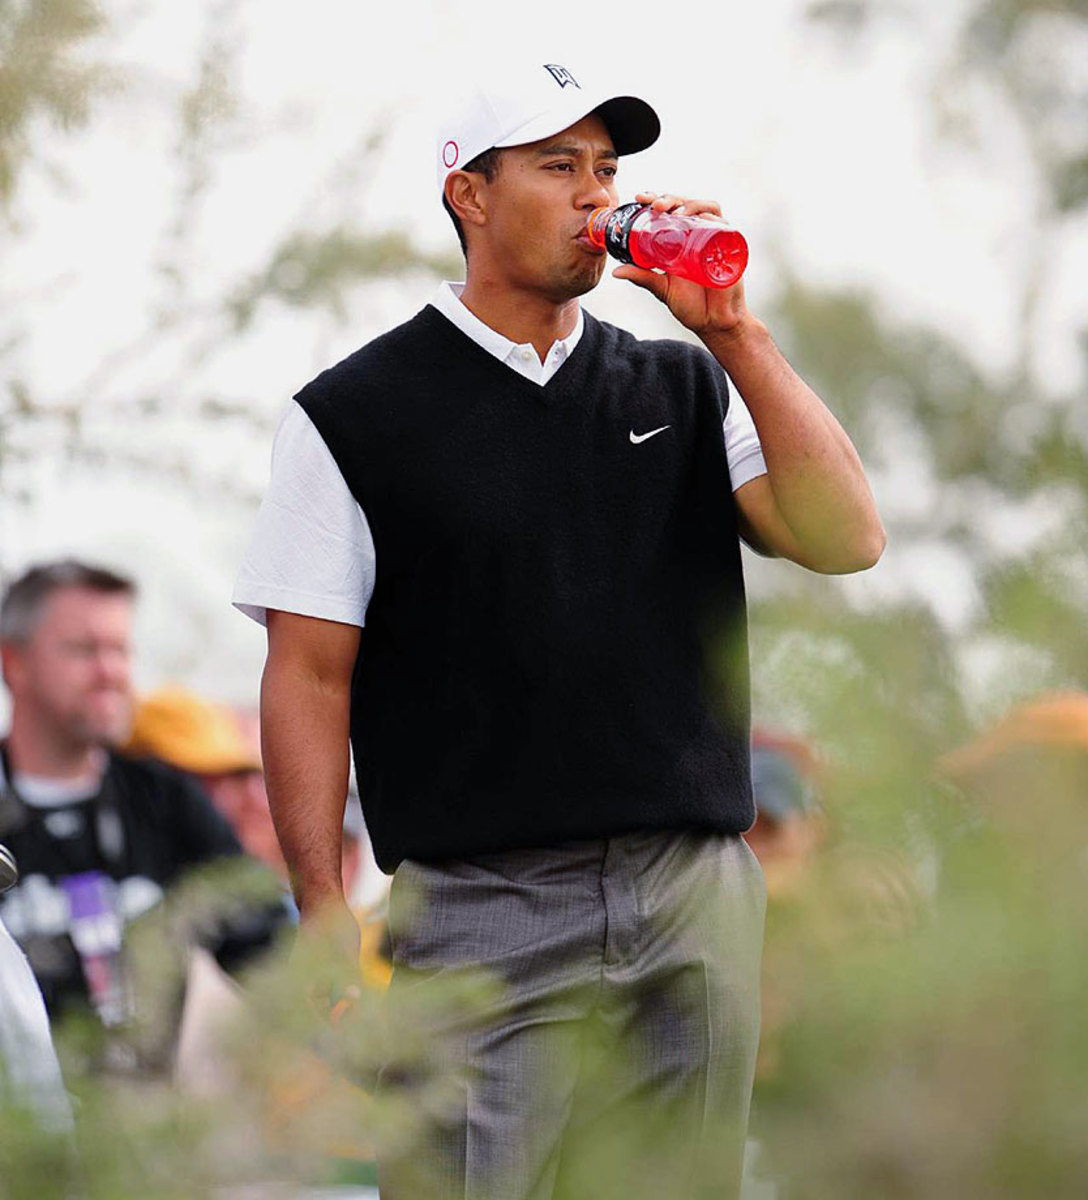 2008-Tiger-Woods-drinking-Gatorade-op85-6732-mid.jpg